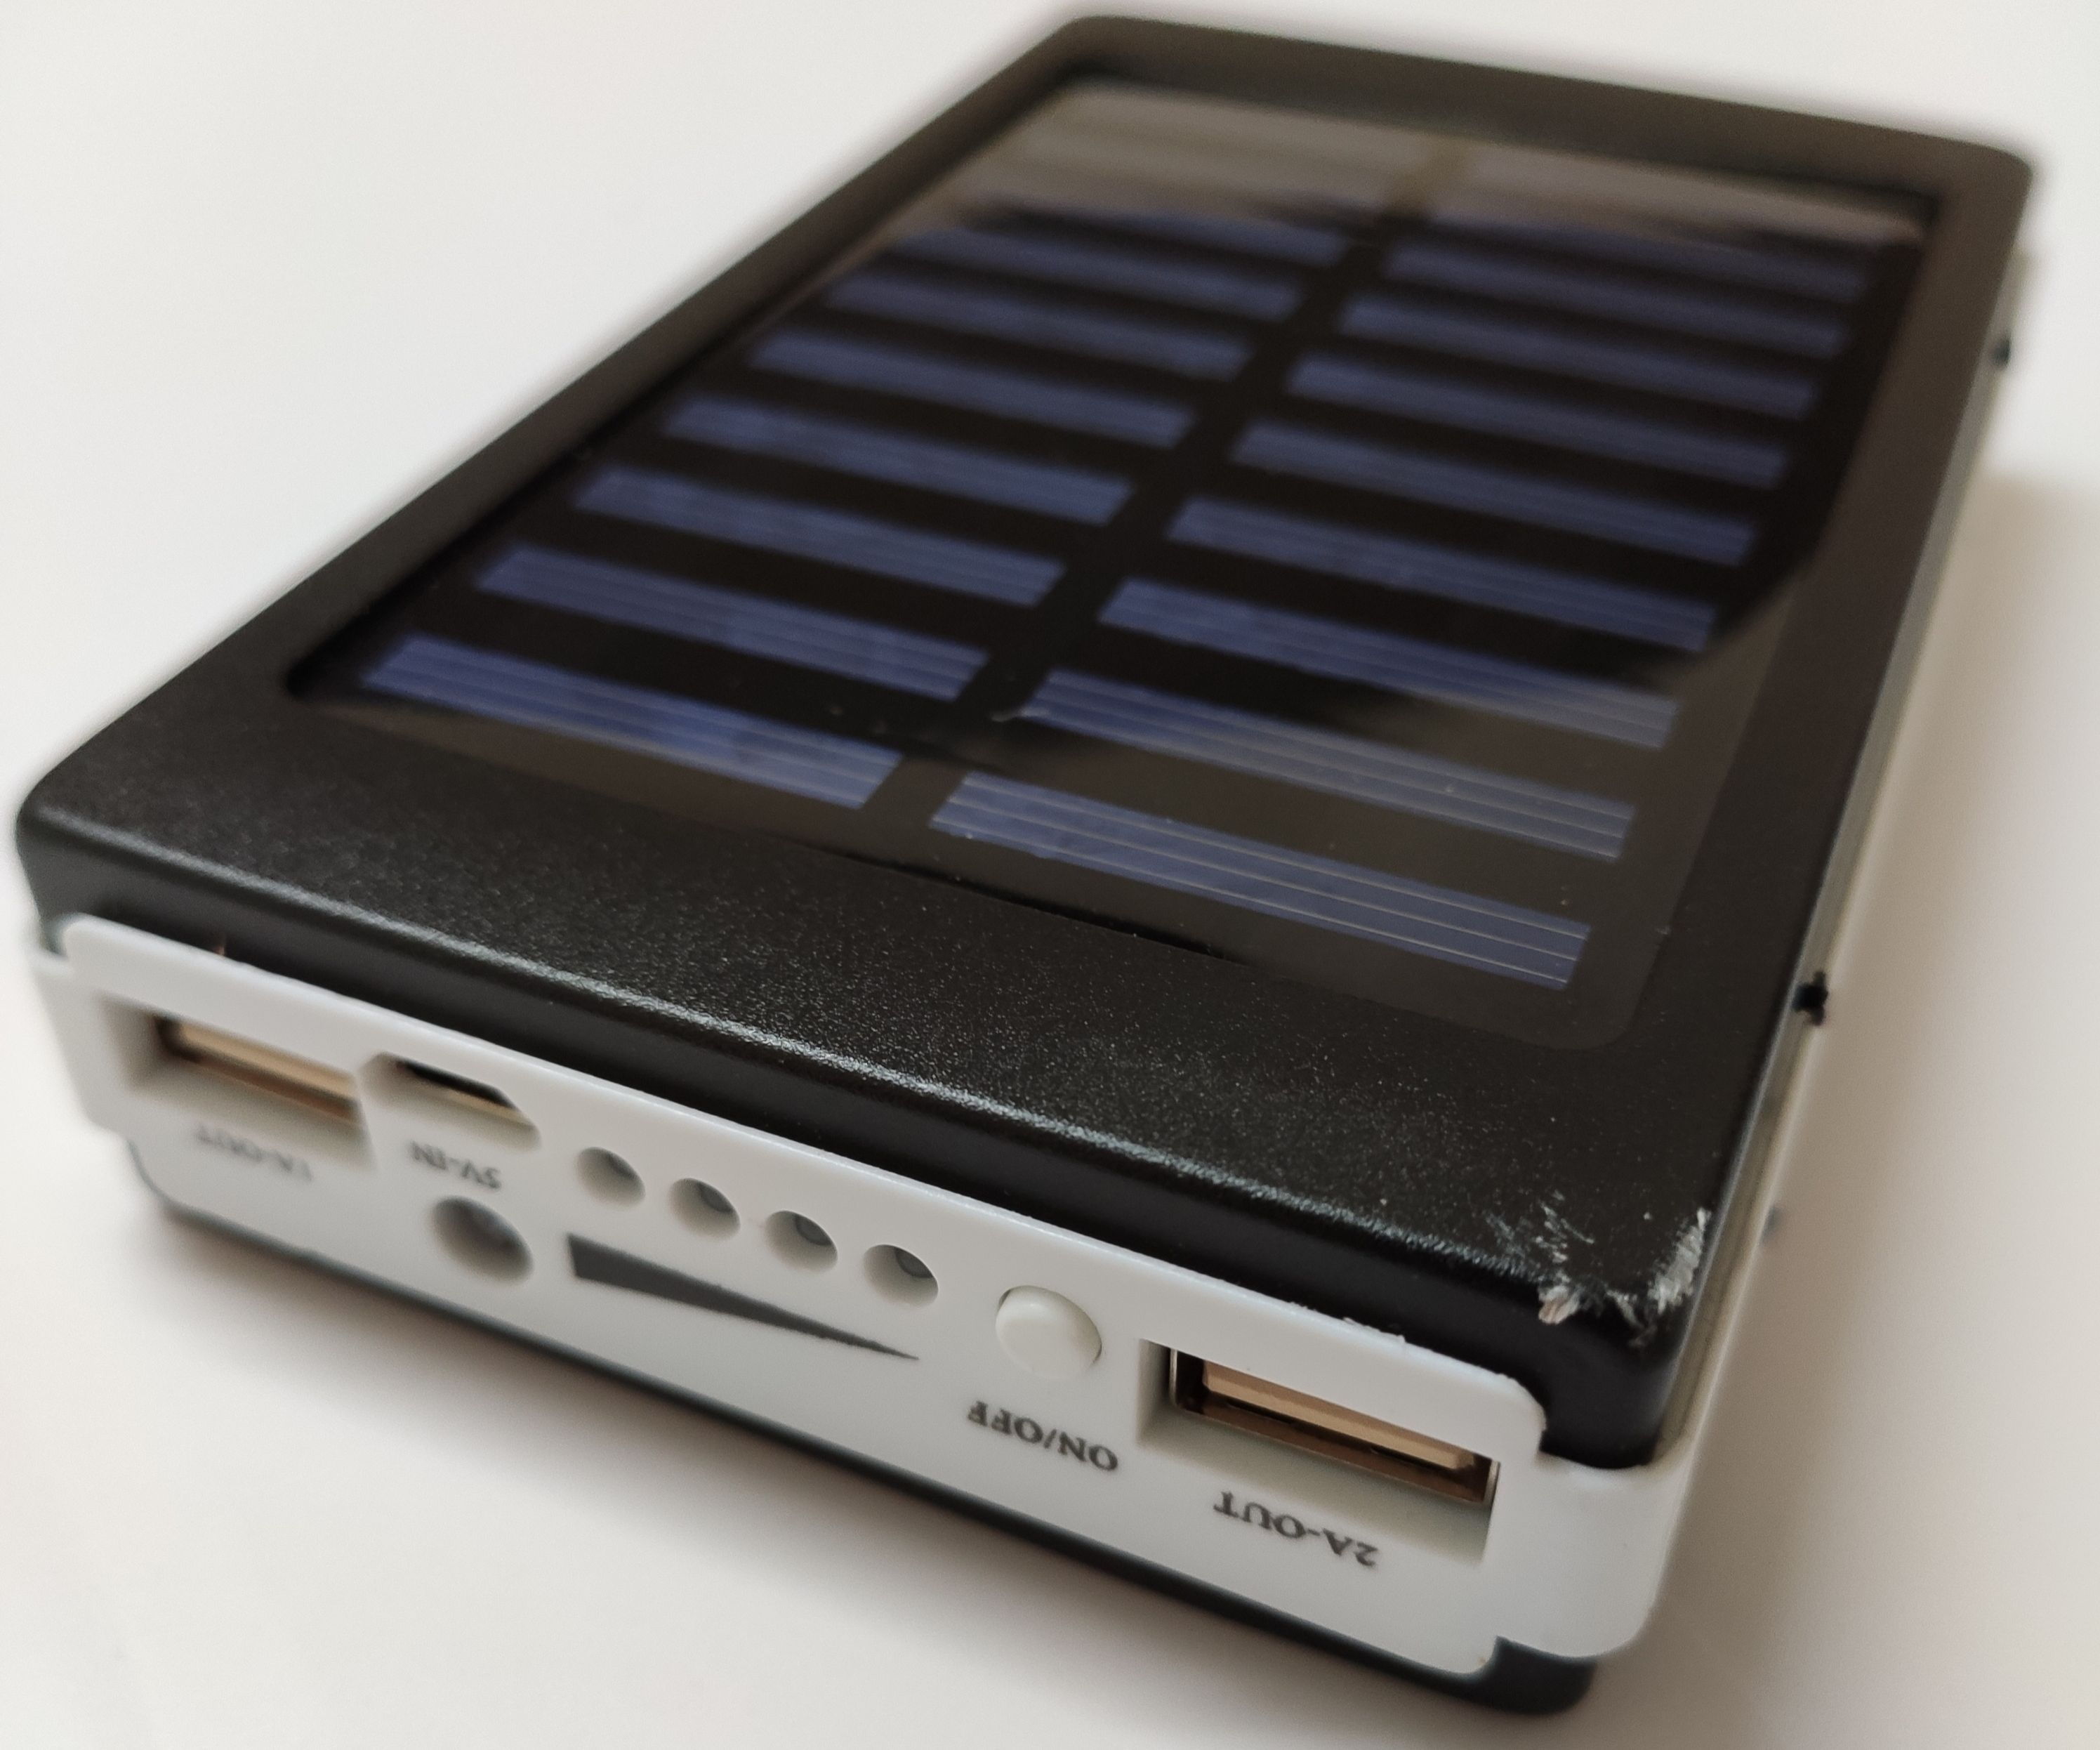 Solar Power Bank Using Old Laptop Batteries